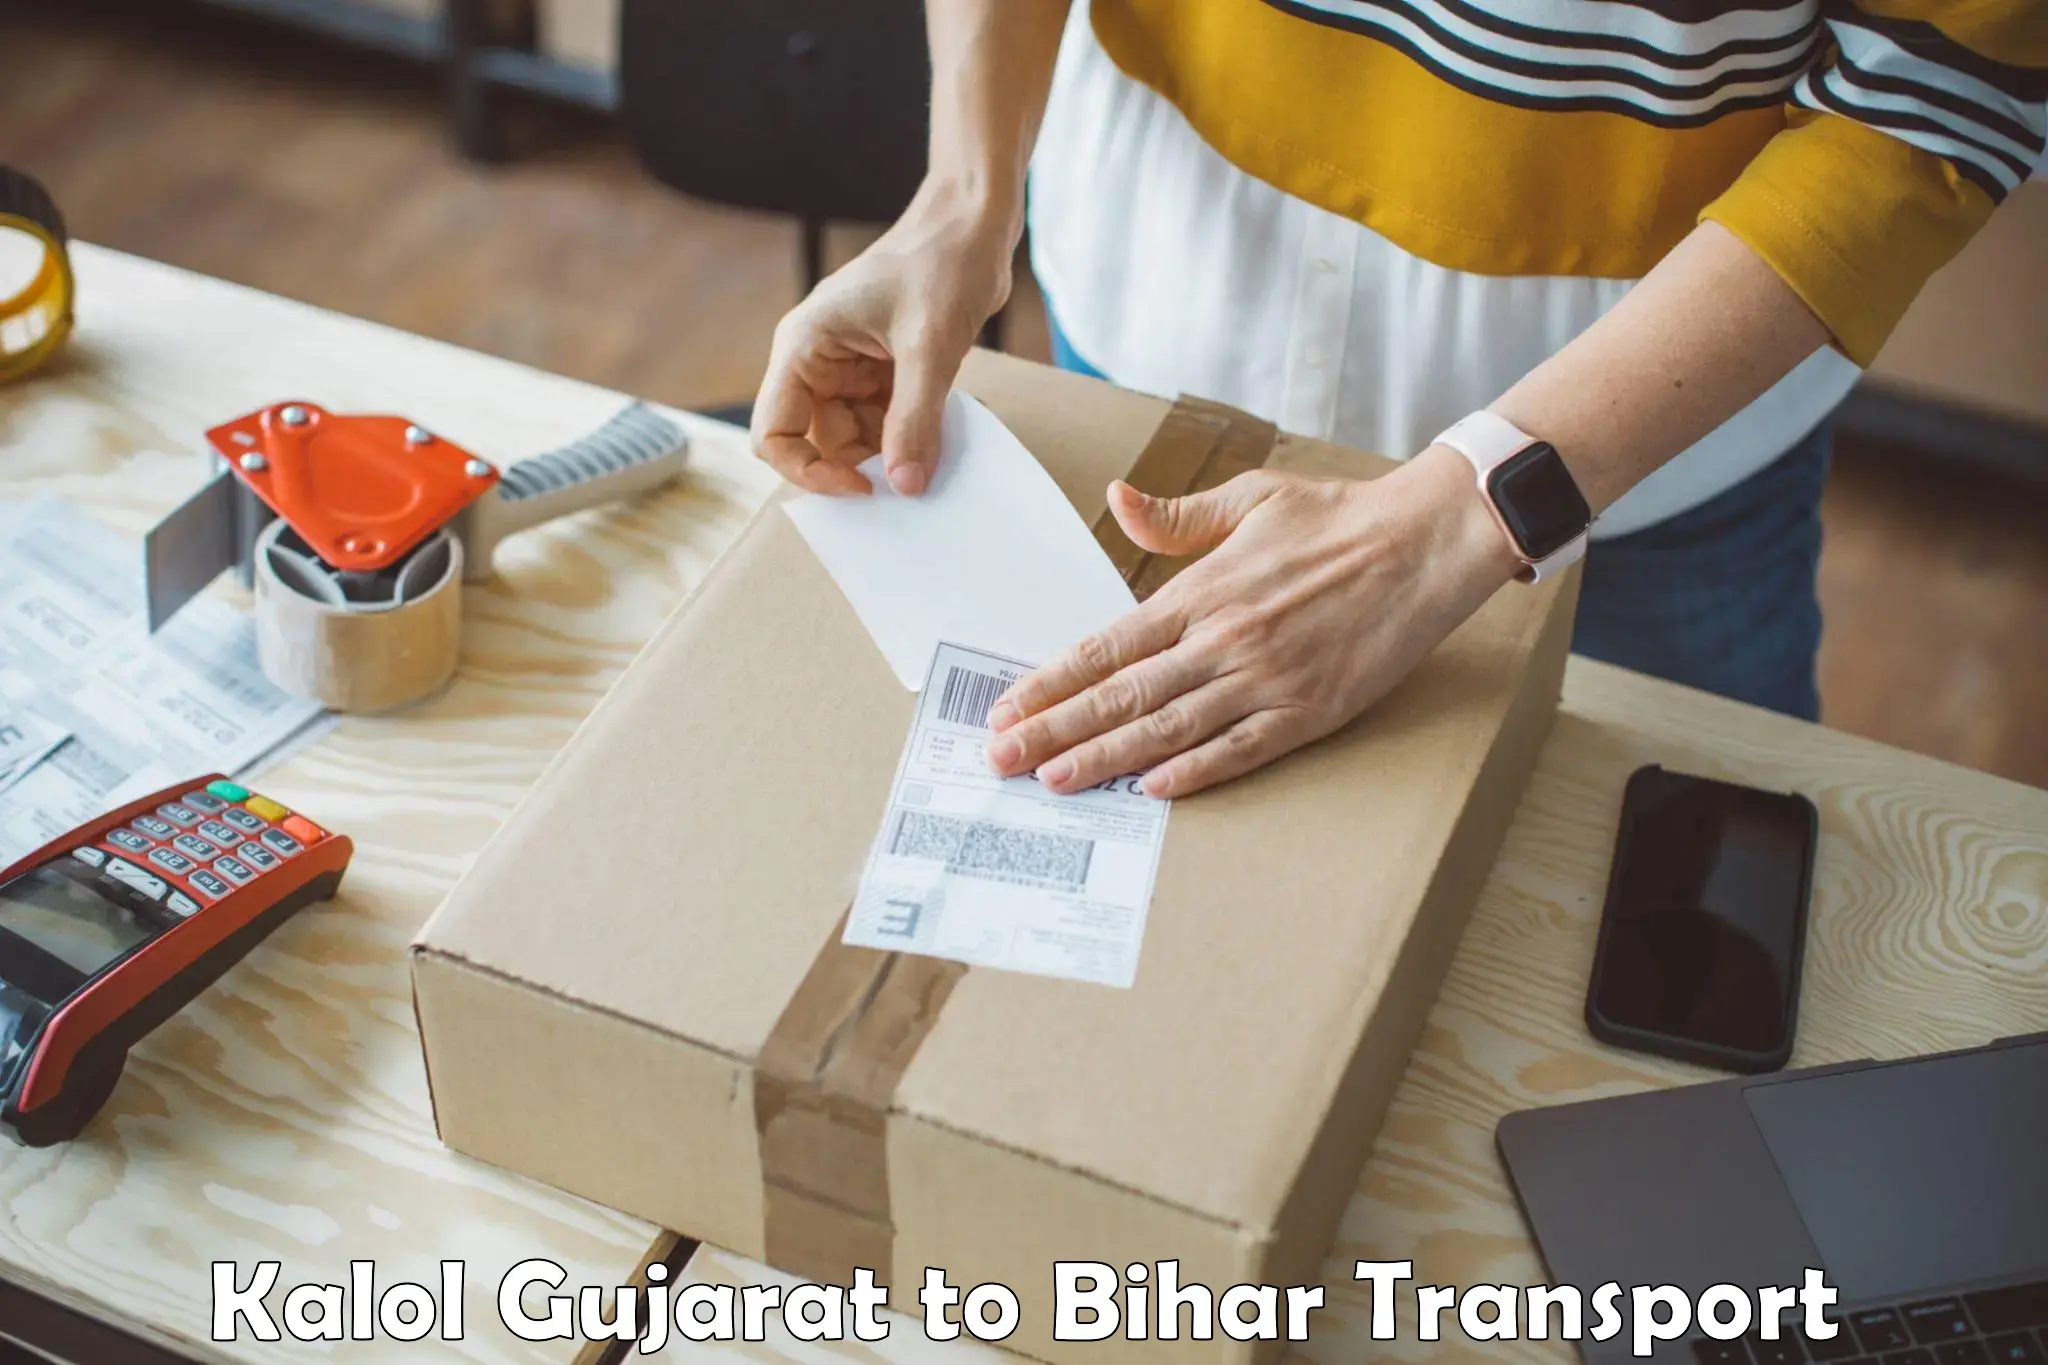 Goods delivery service Kalol Gujarat to Dinara